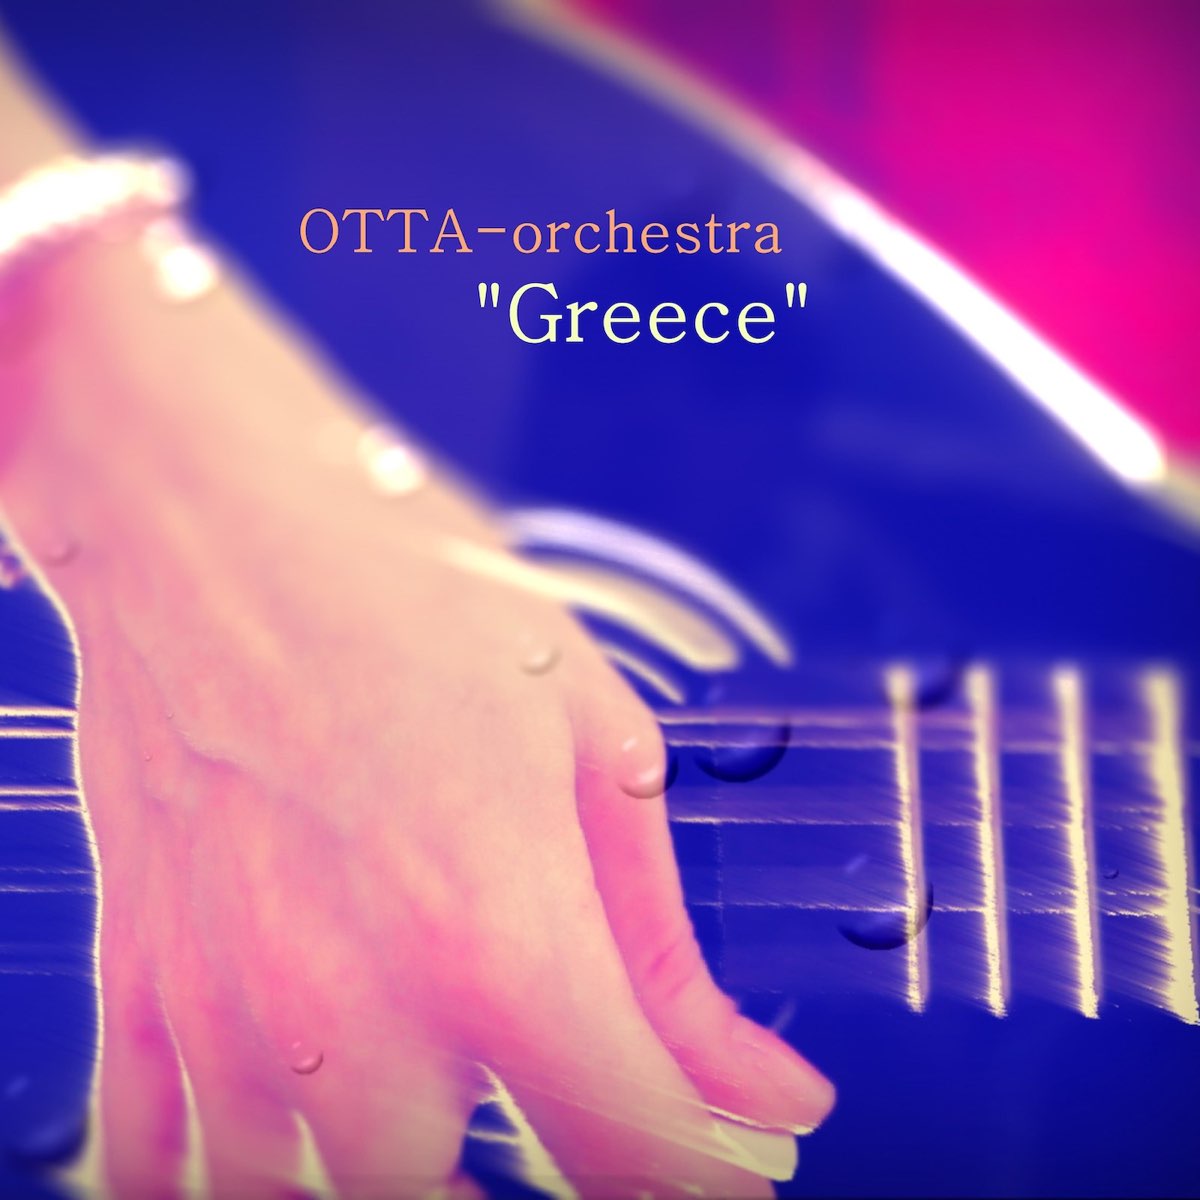 Otta orchestra лучшее. Отта-Orchestra. Otta-Orchestra album. Otta-Orchestra.Greek. Otta Orchestra логотип.